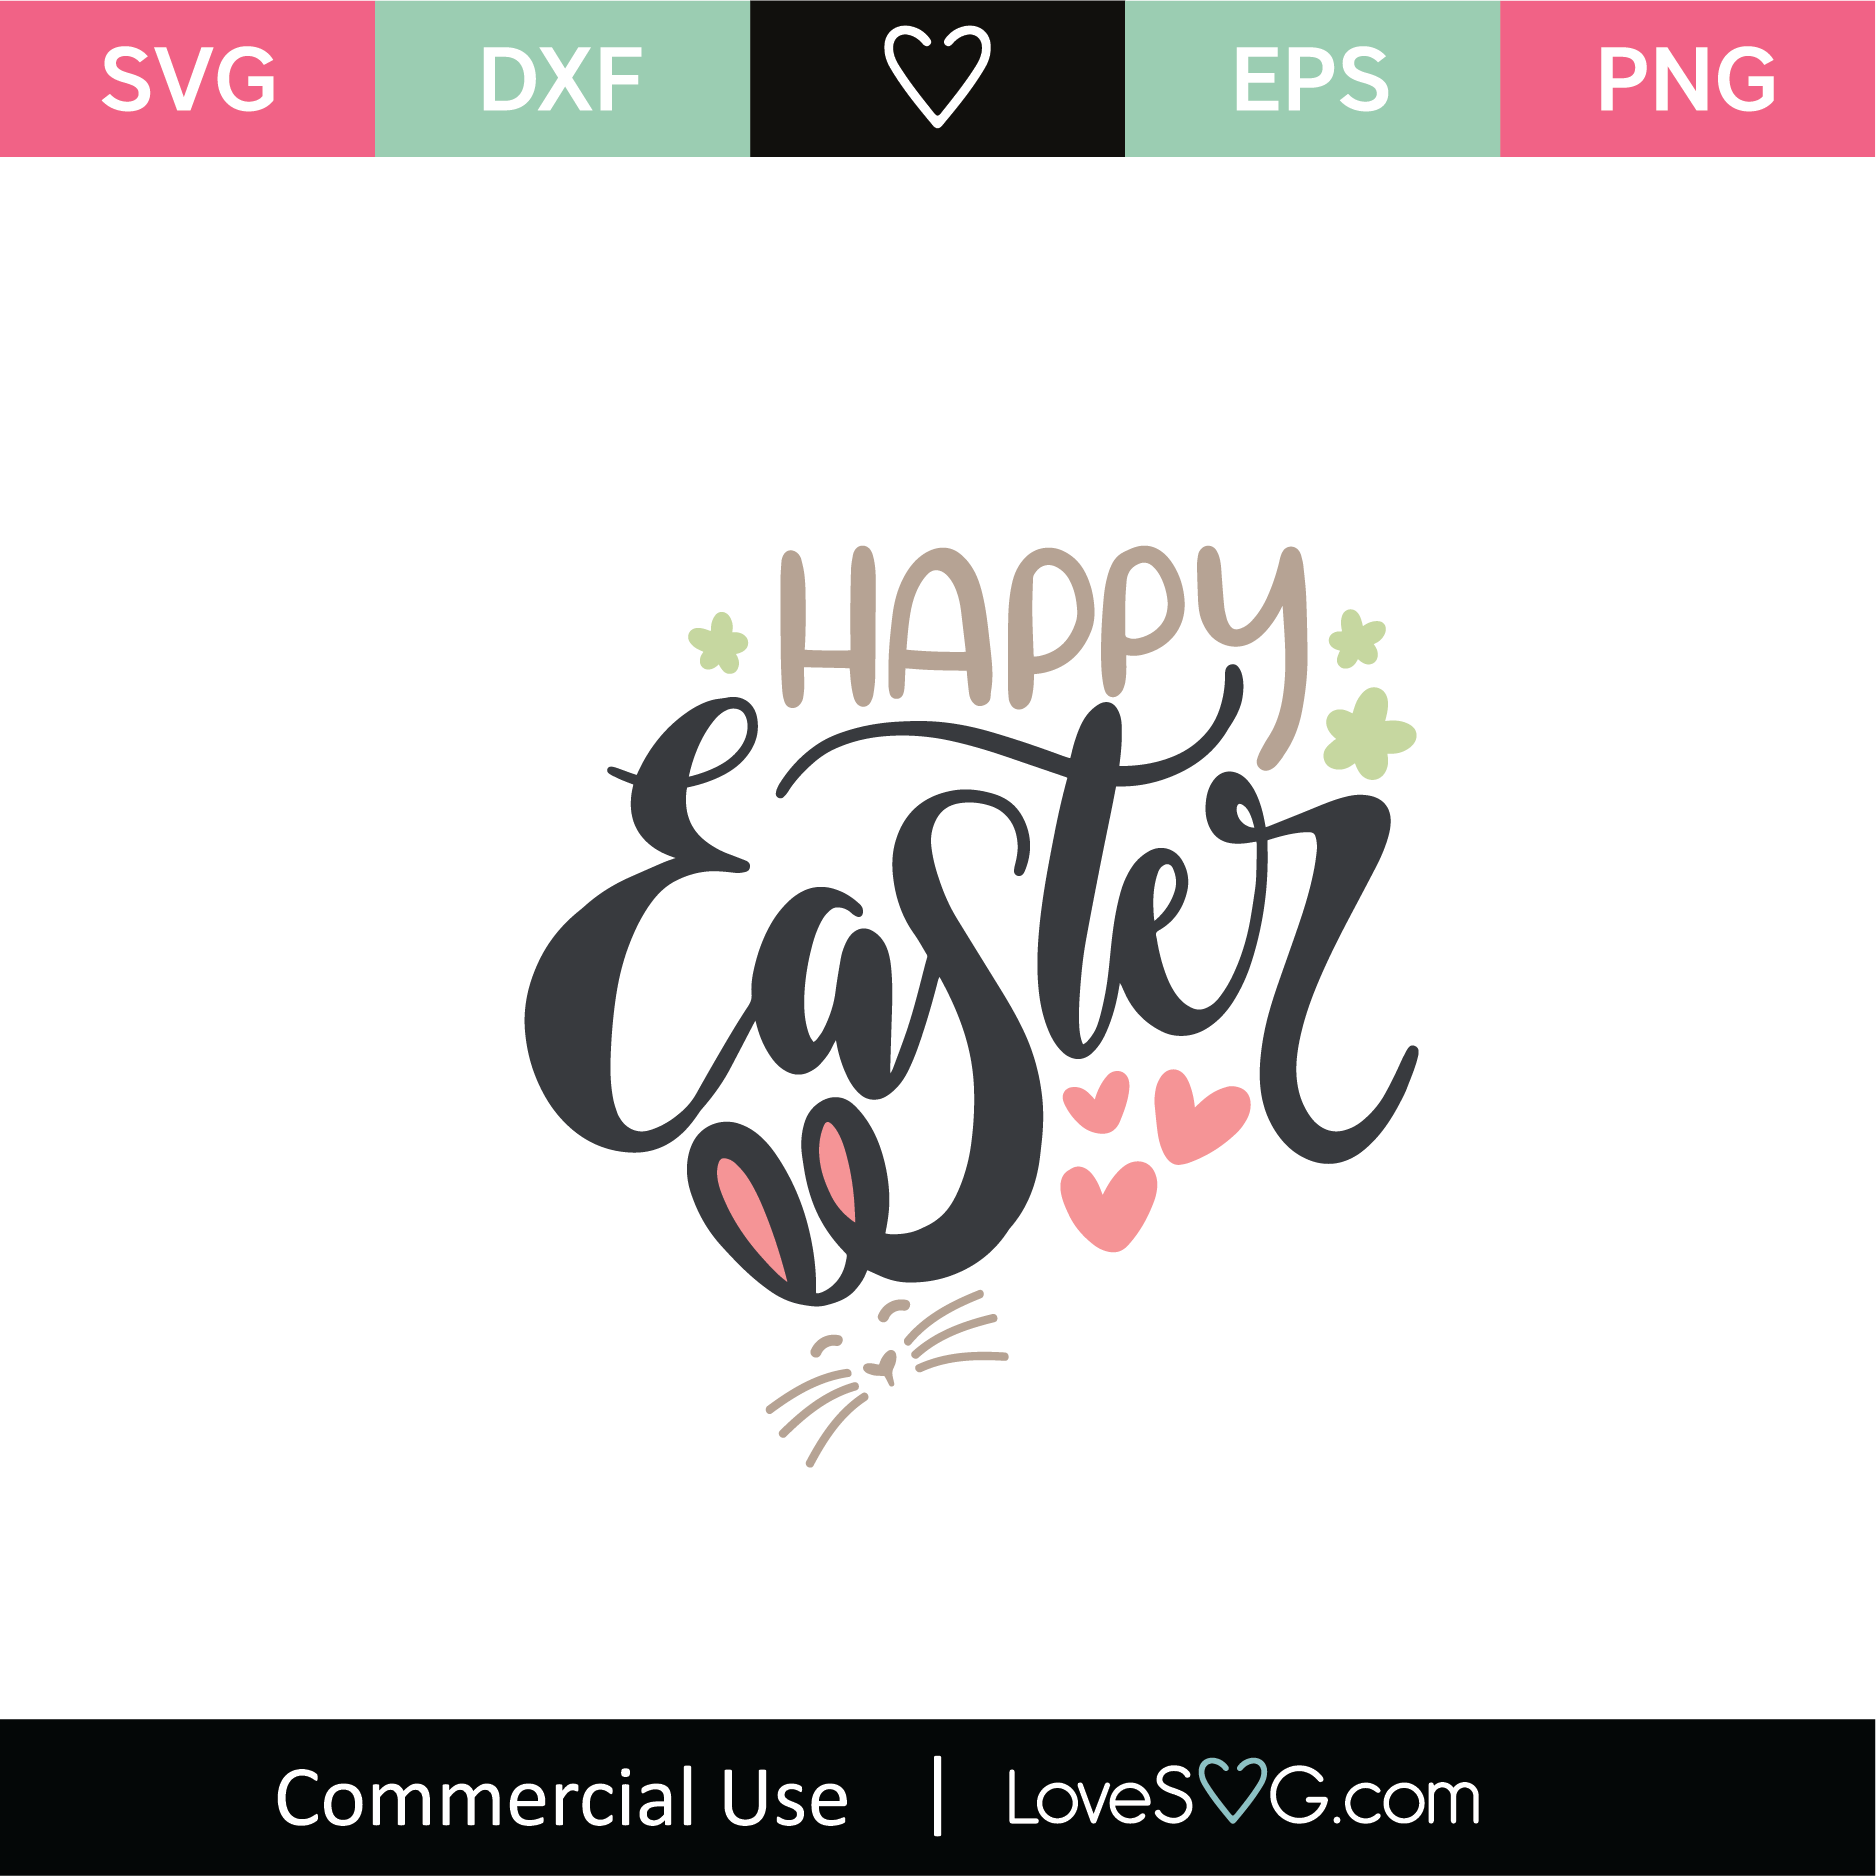 Happy Easter SVG Cut File - Lovesvg.com